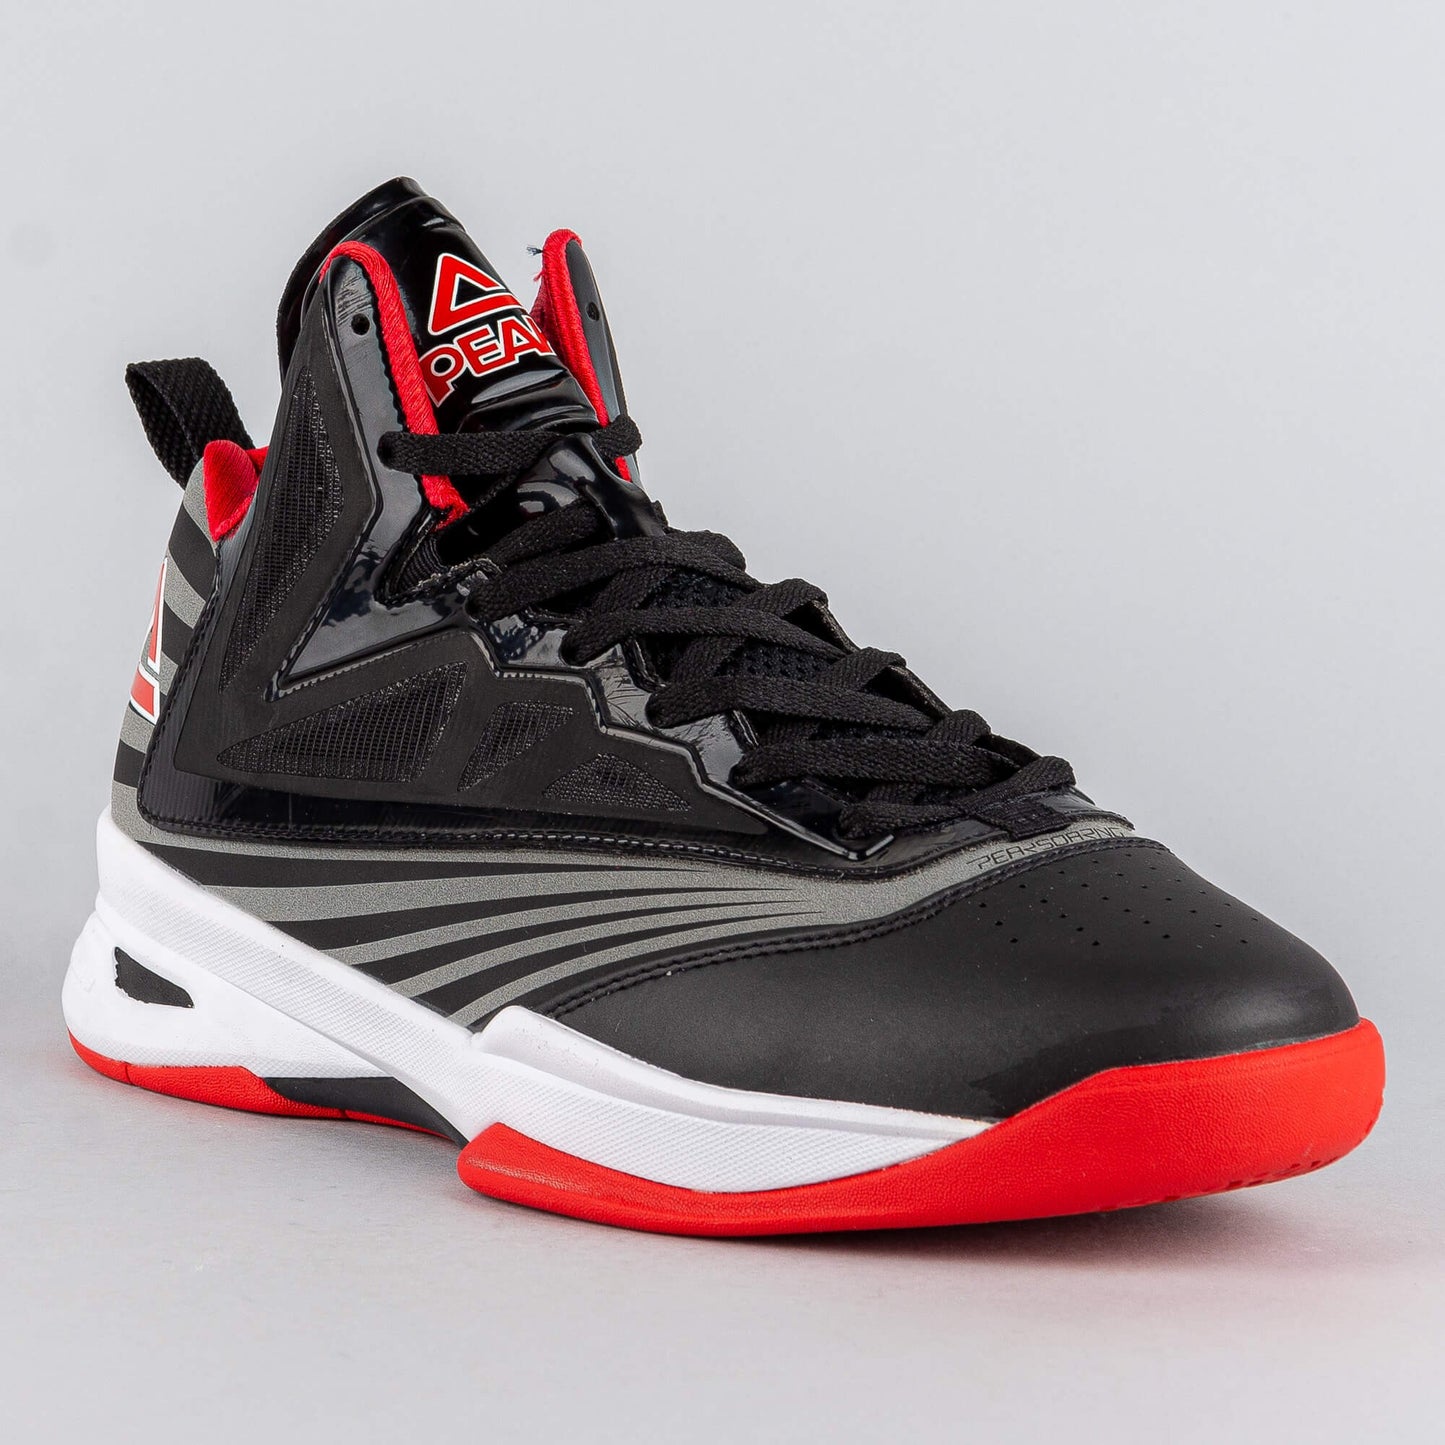 Peak Basketball Shoes Soaring II-7 3M Reflective Black/Red